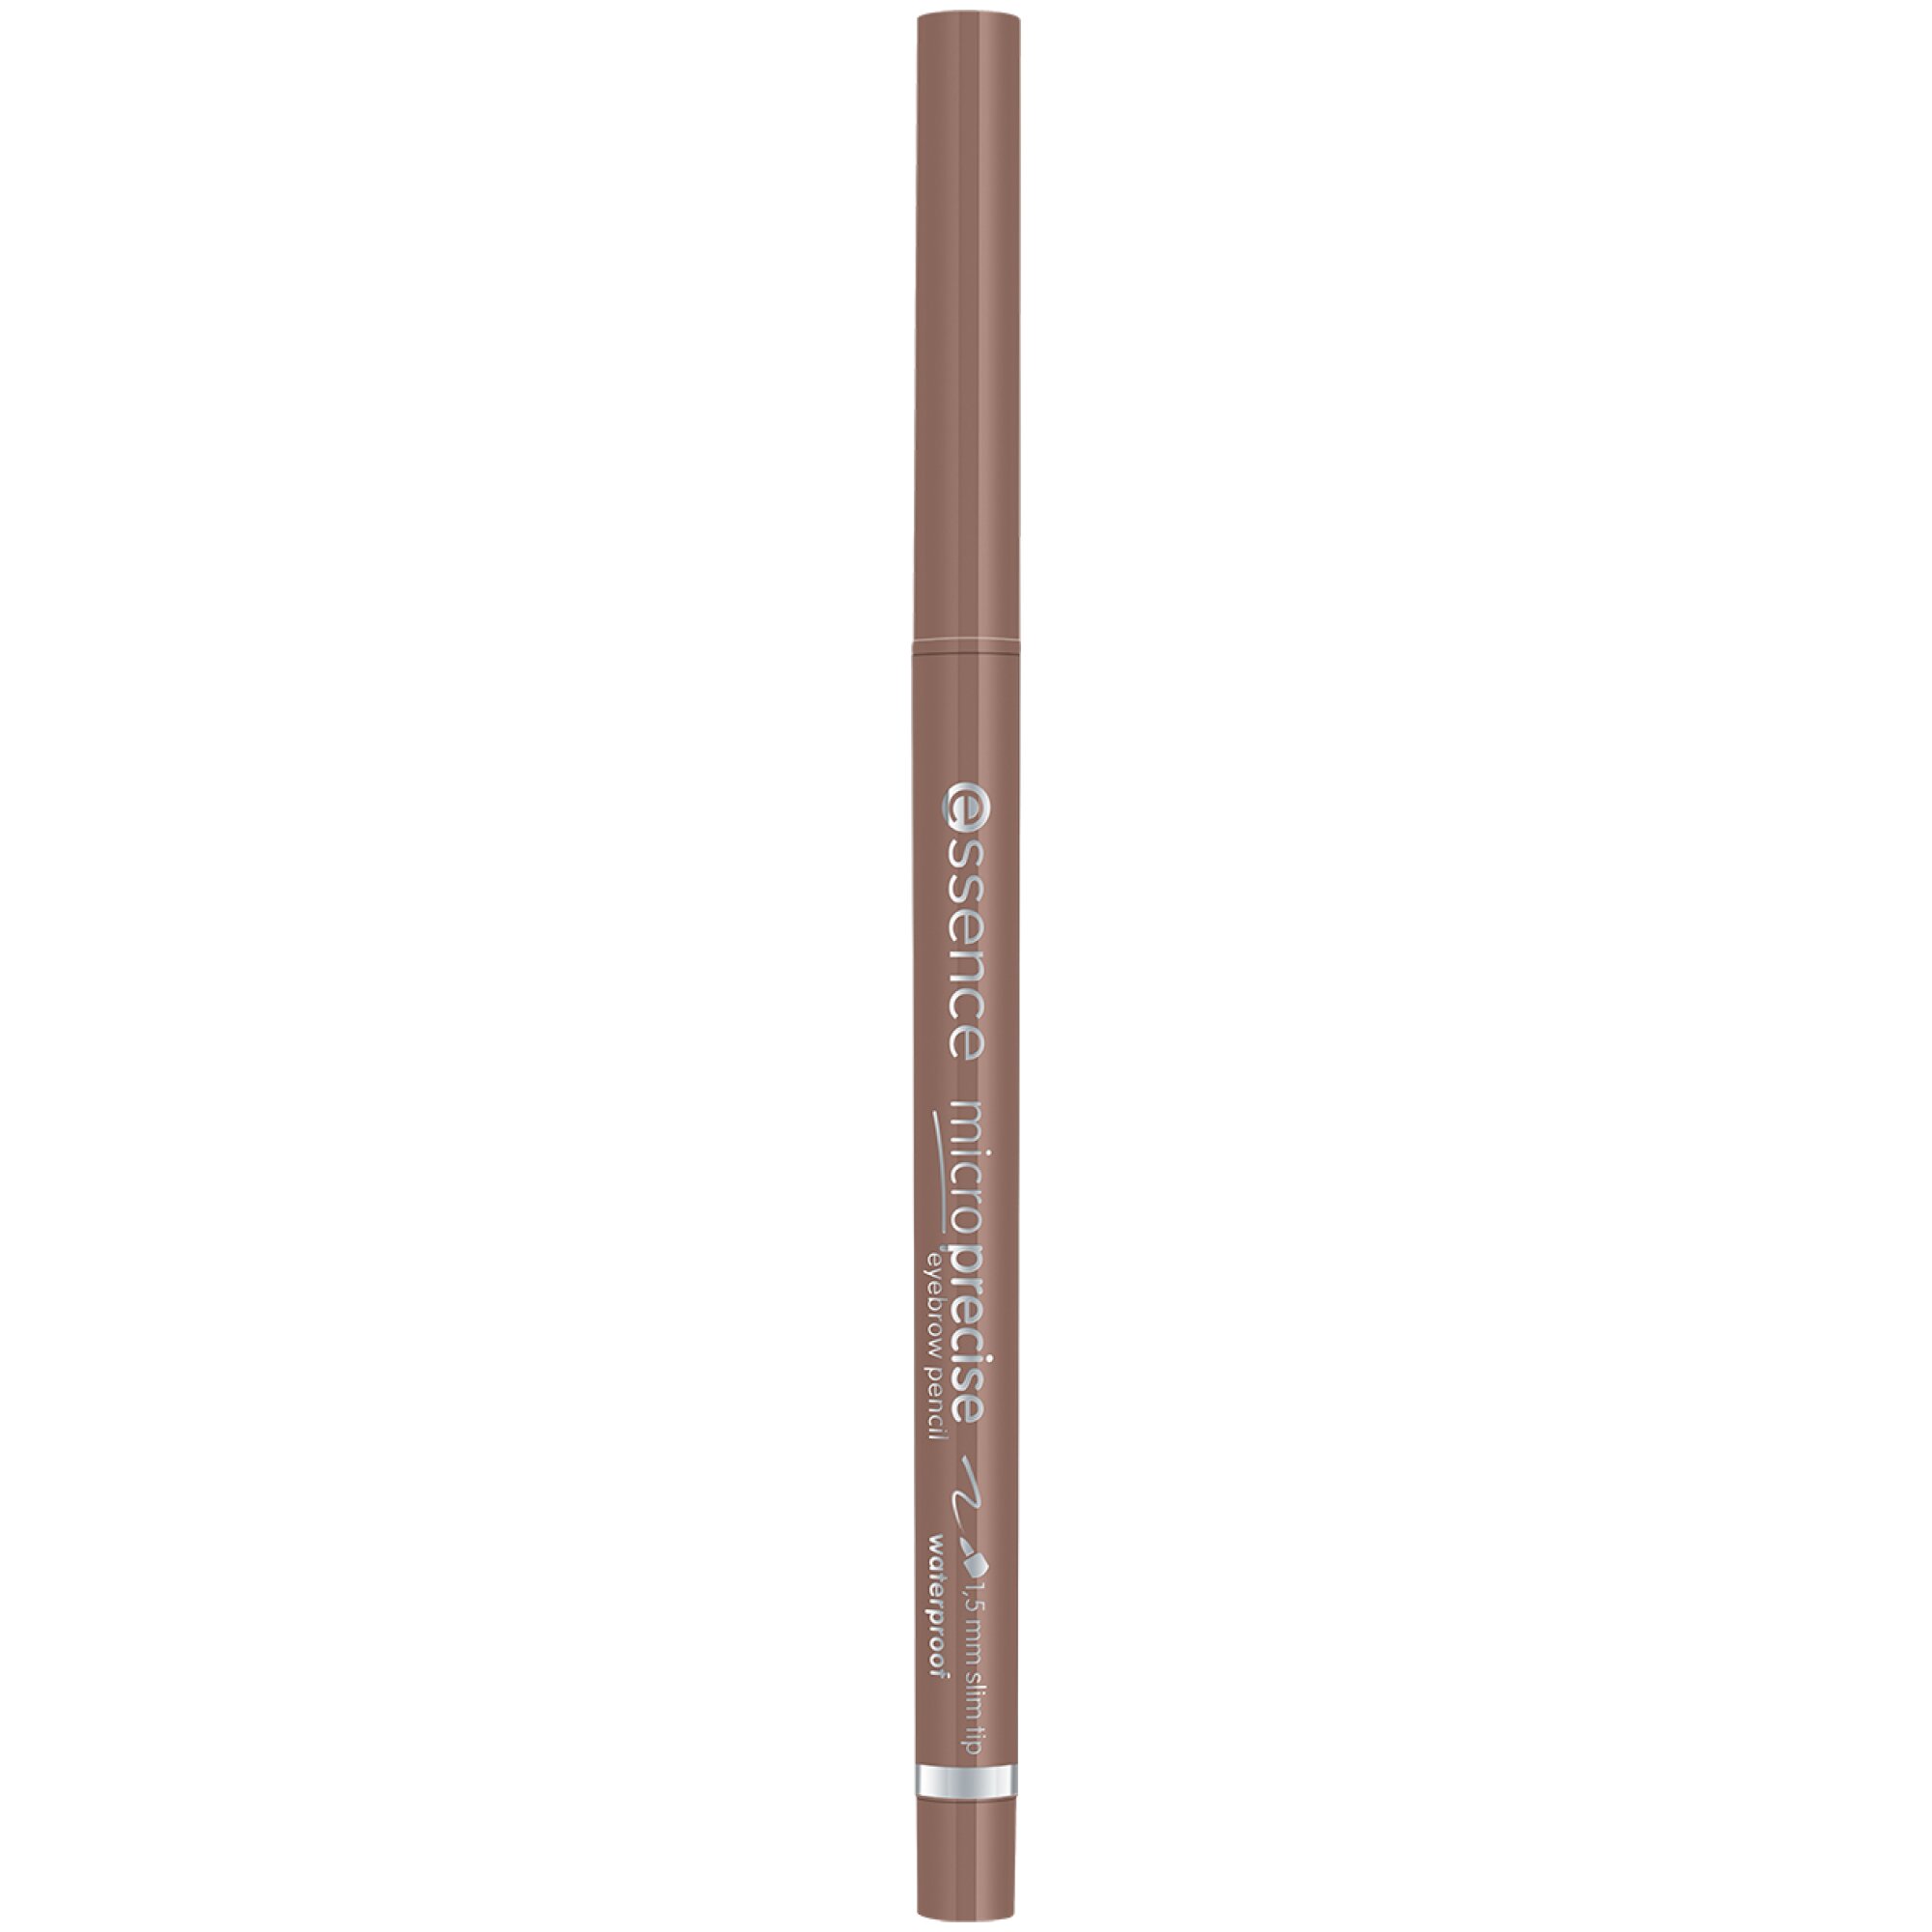 Creion pentru sprancene Micro Precise, 04 - dark blonde, 0.05 g, Essence